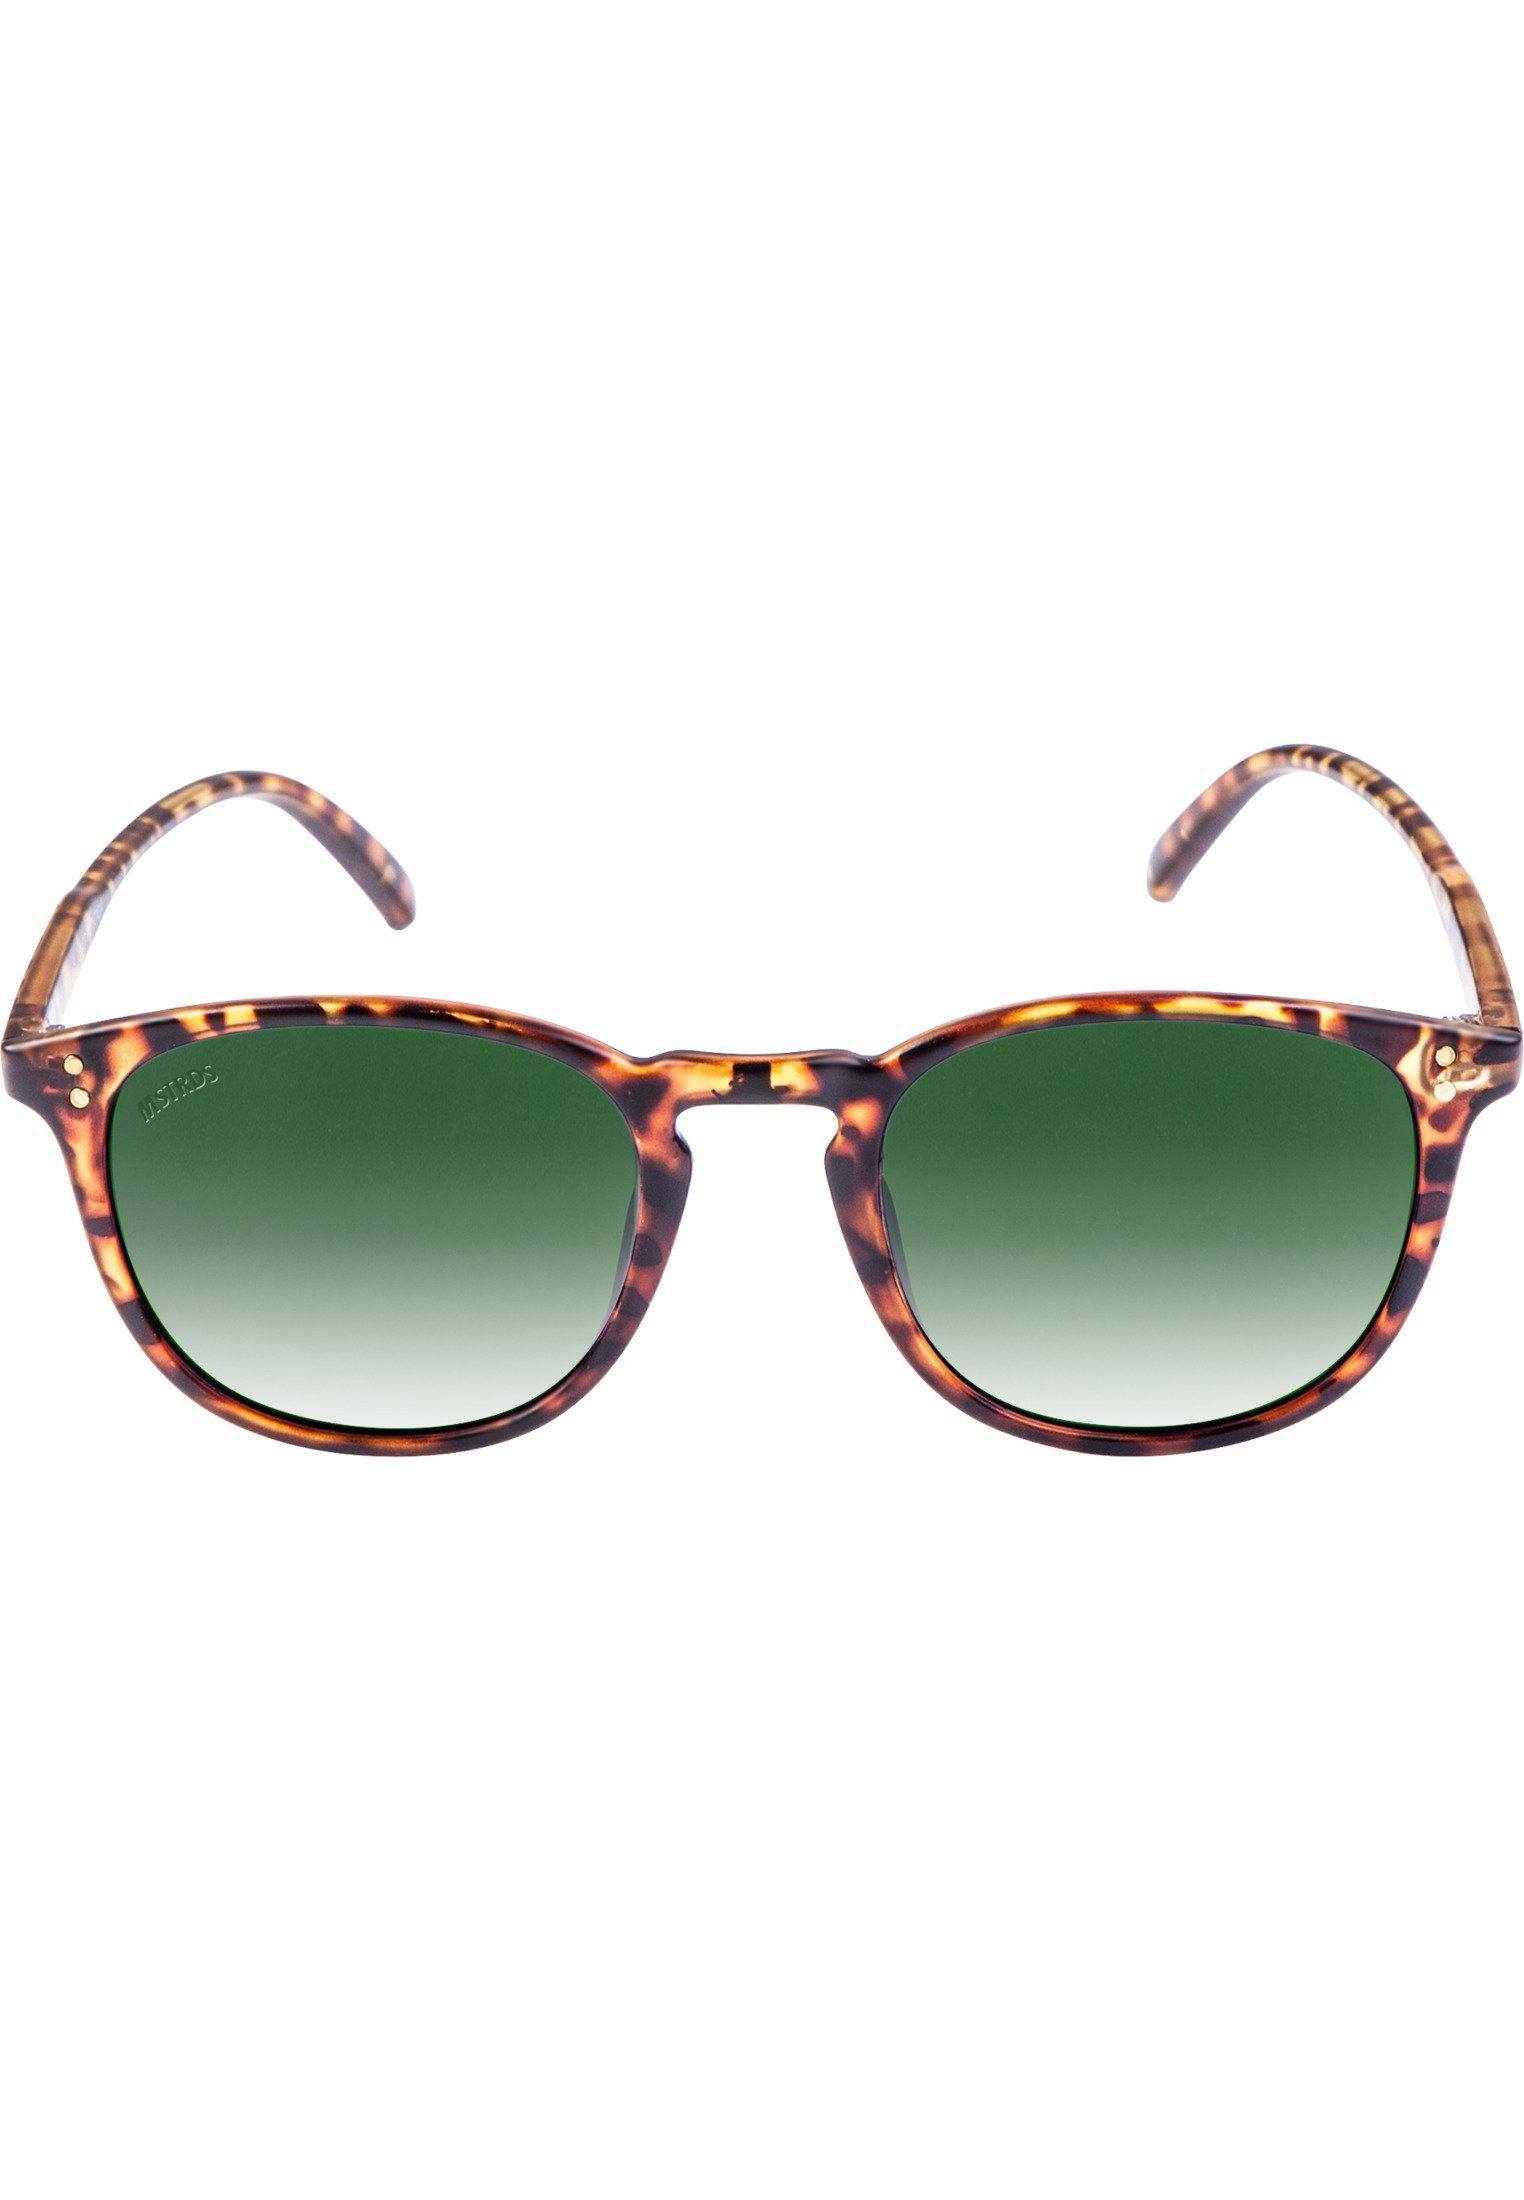 MSTRDS Sonnenbrille Accessoires Sunglasses Arthur Youth havanna/green